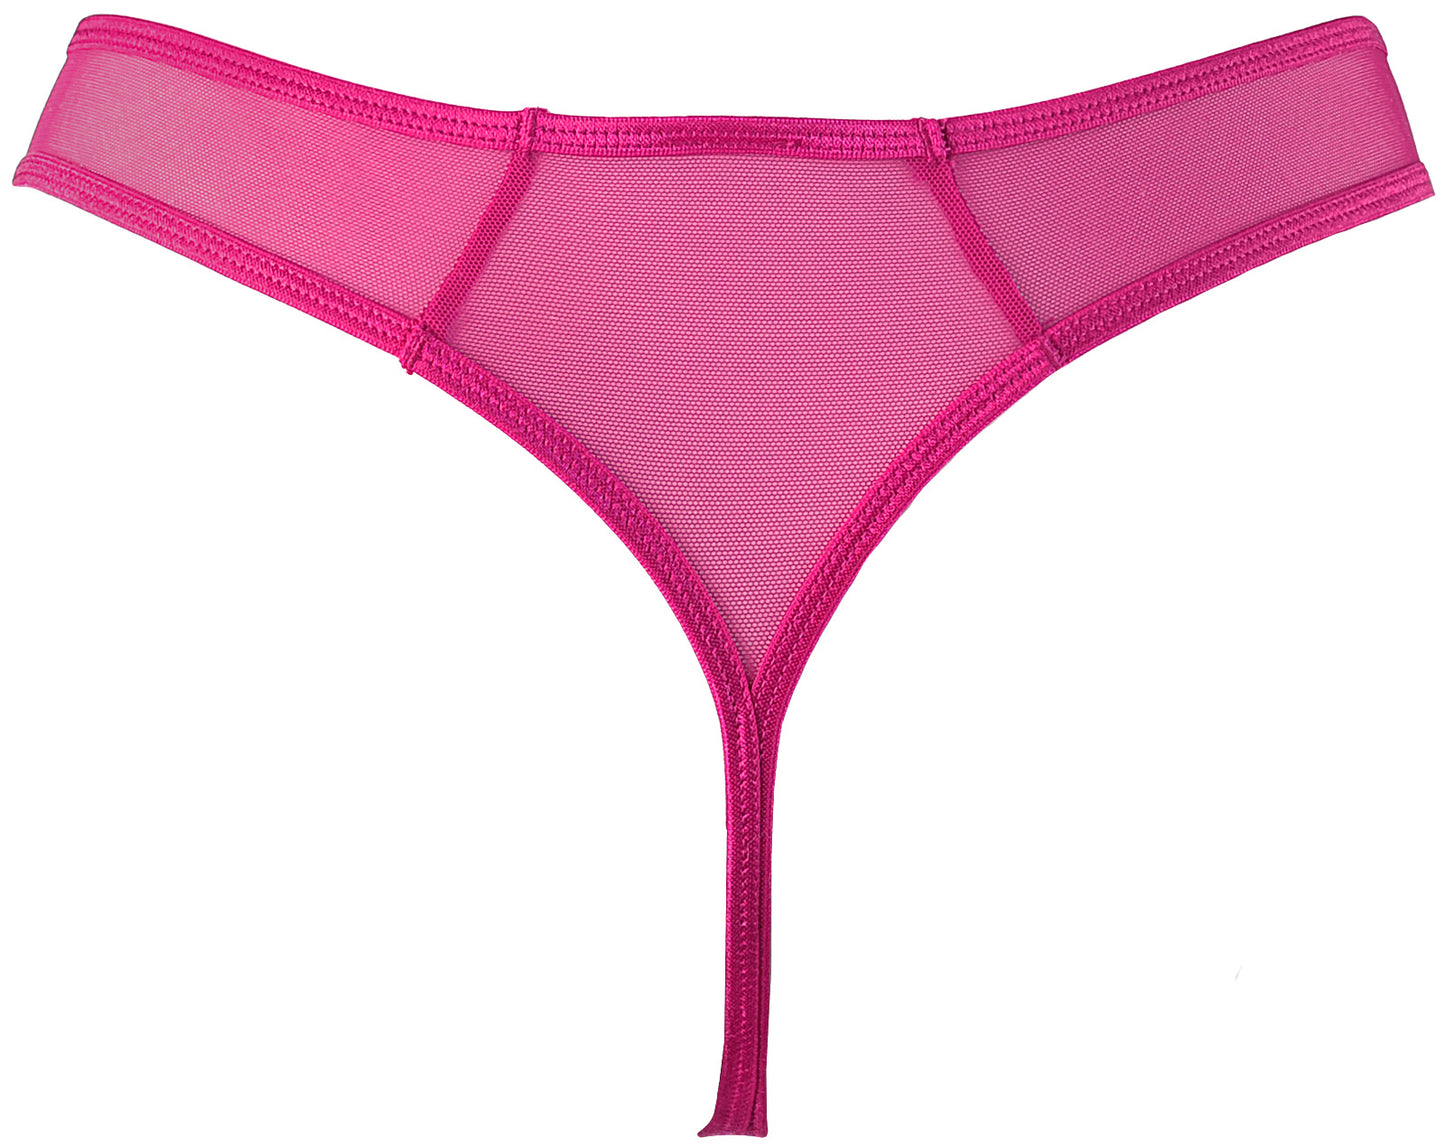 Axami 10258 Embroidery Thong Panty Brillance Pink Shimmer